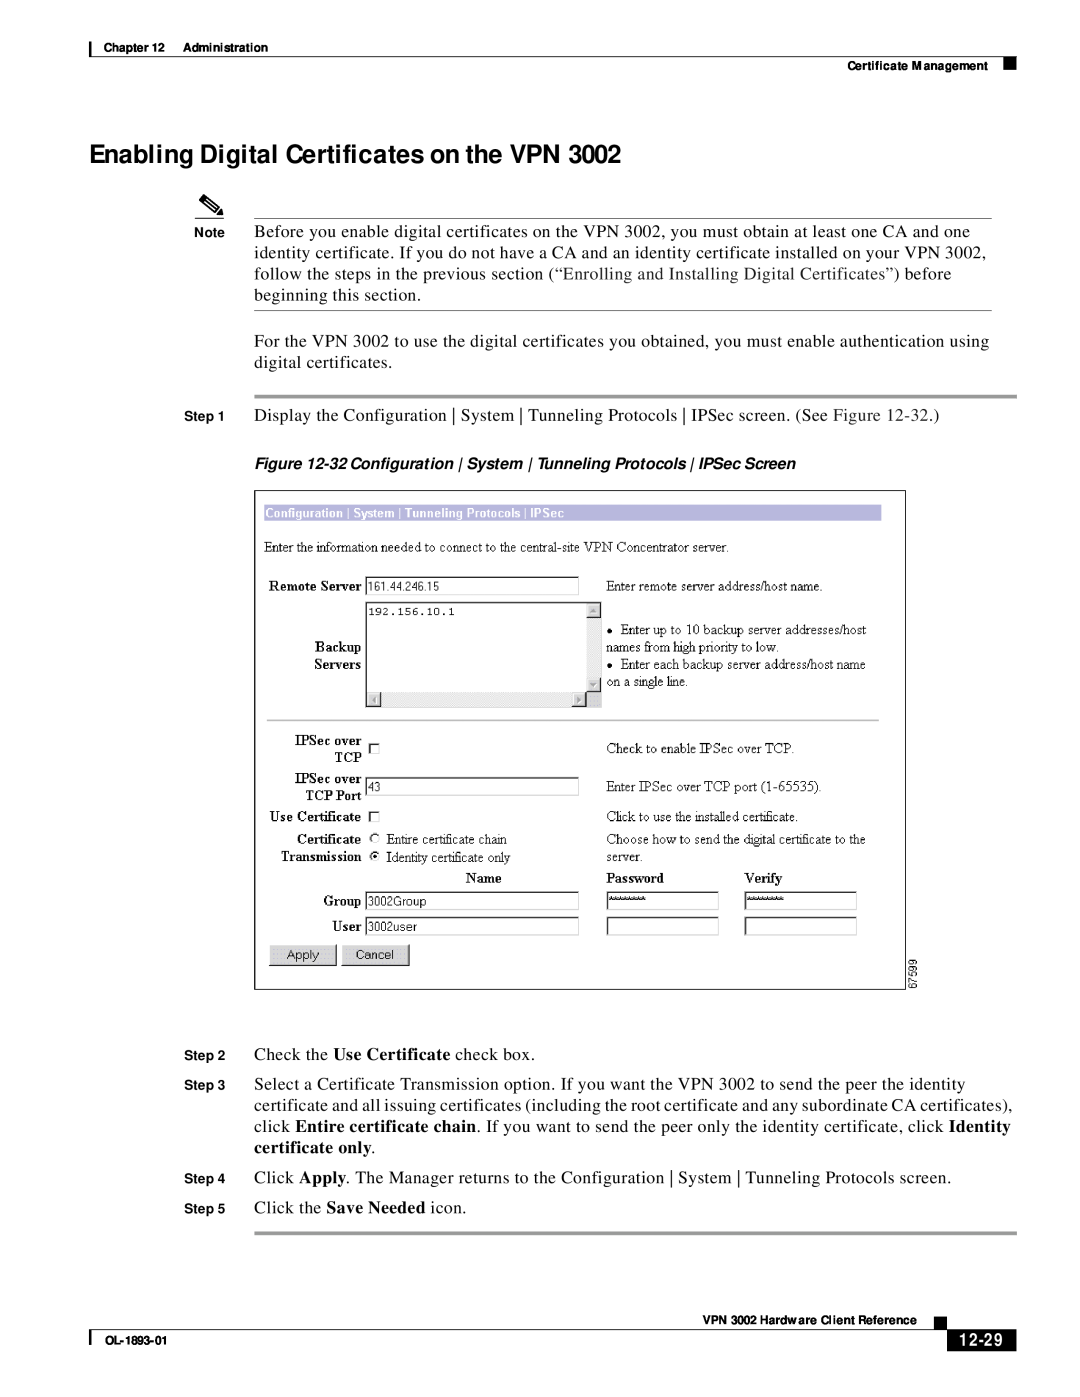 Cisco Systems VPN 3002 manual Enabling Digital Certificates on the VPN, 12-29 